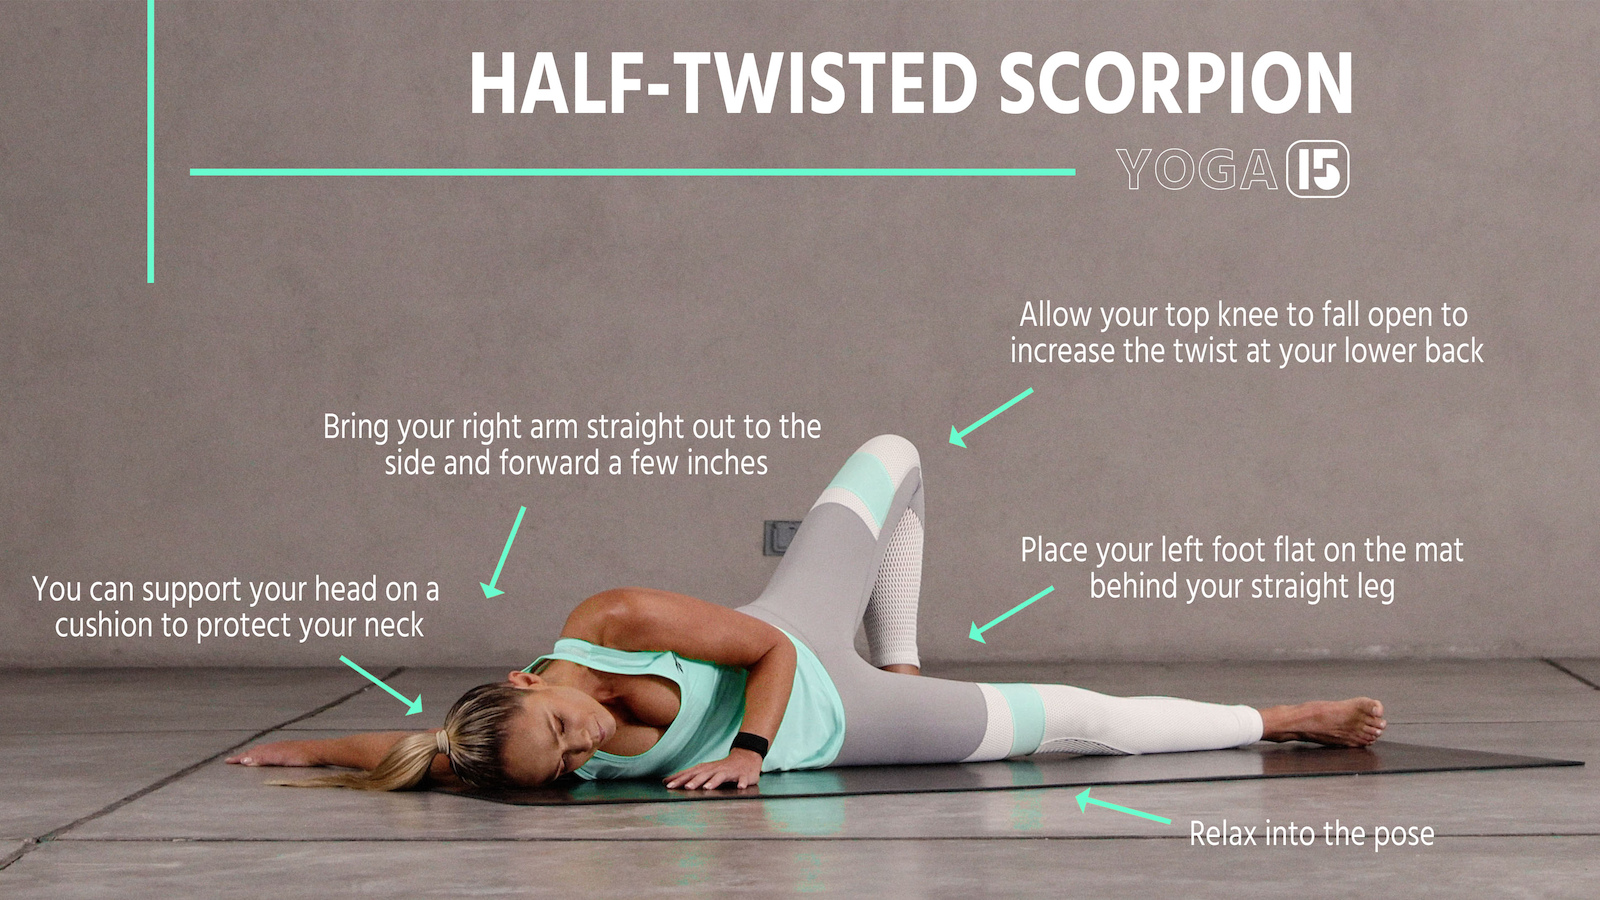 Yoga 15 Half-Twisted Scorpion